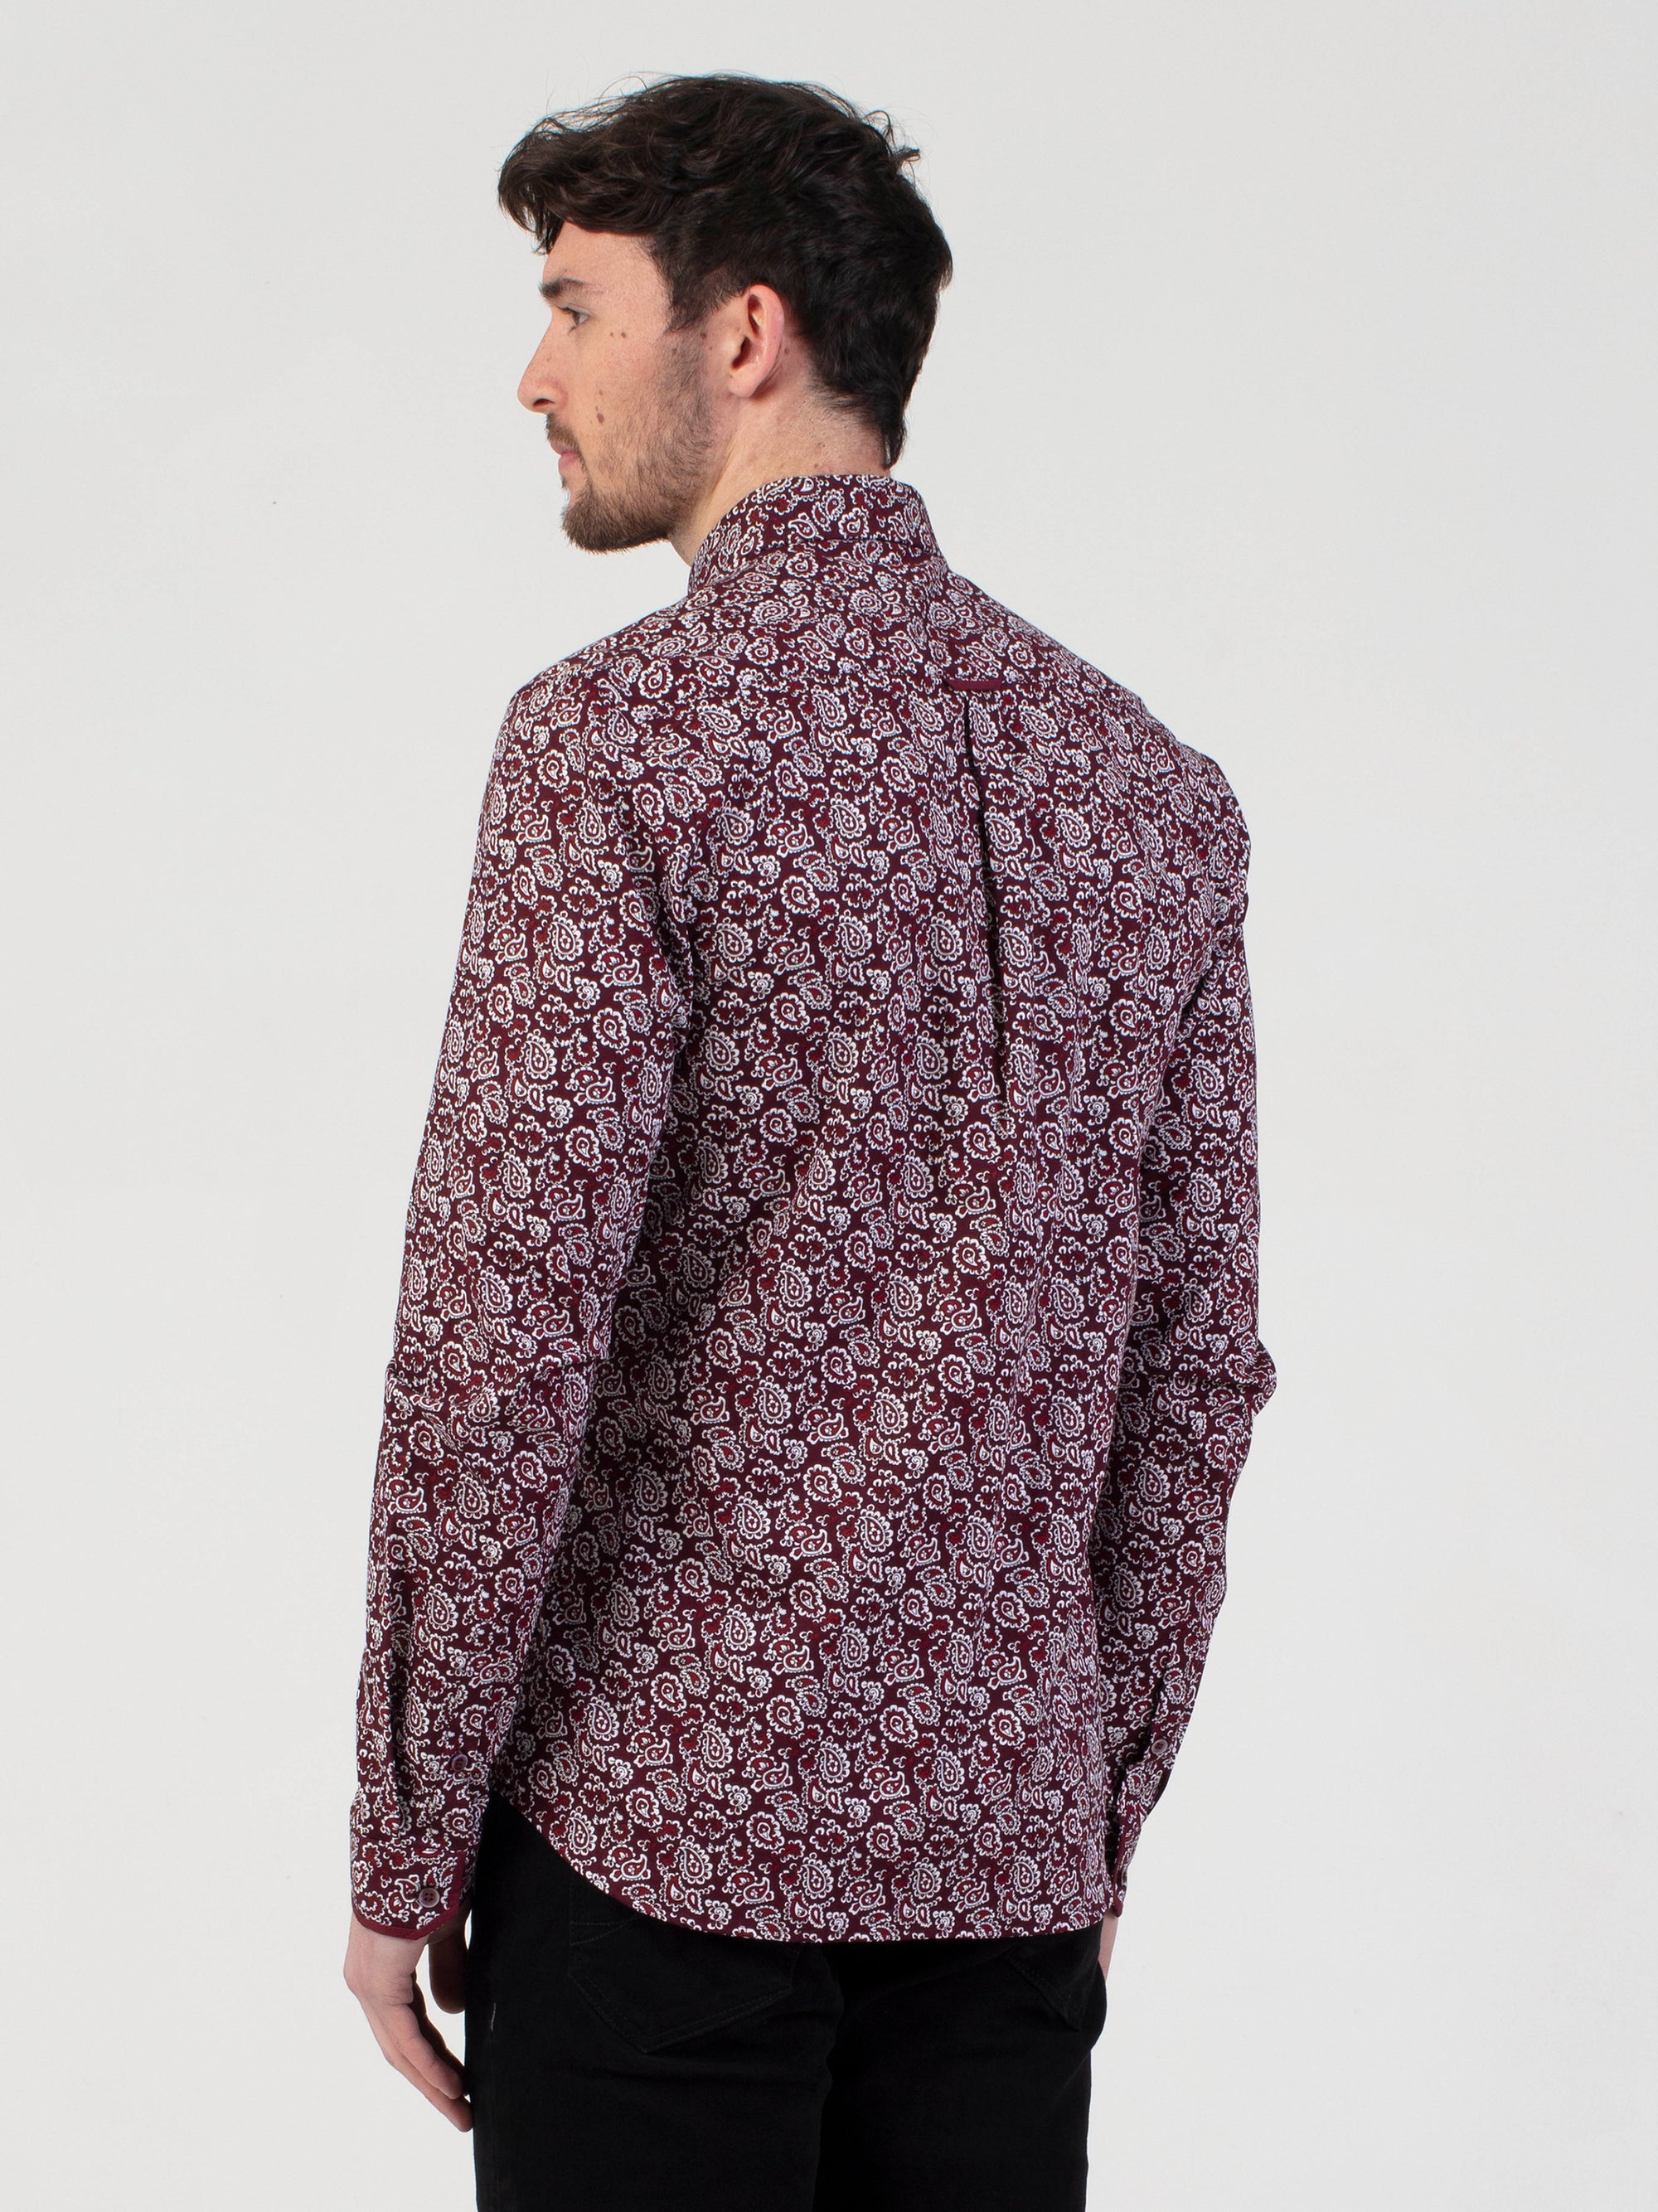 Regular fit All-over classic paisley print burgundy long sleeve shirt mish mash